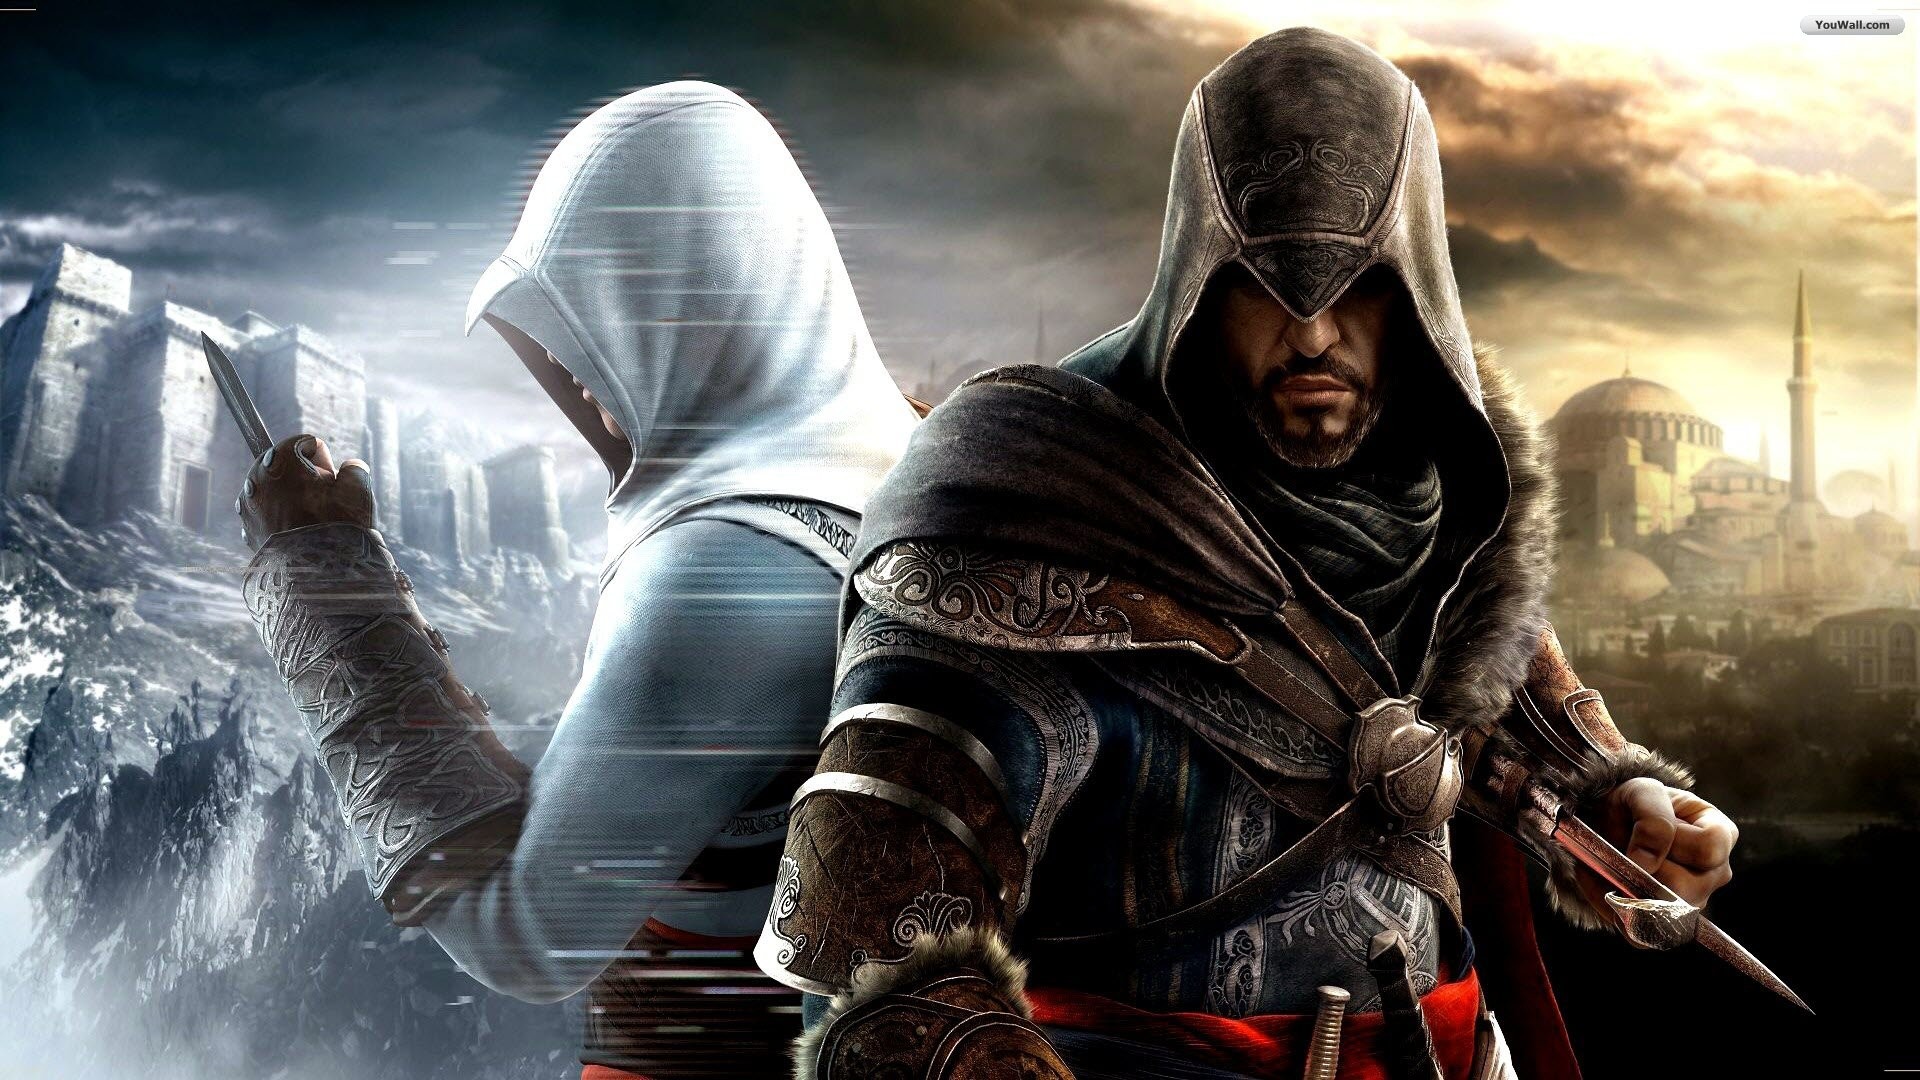 1920x1080 YouWall - Assassins Creed - Ezio and Altair Wallpaper - wallpaper